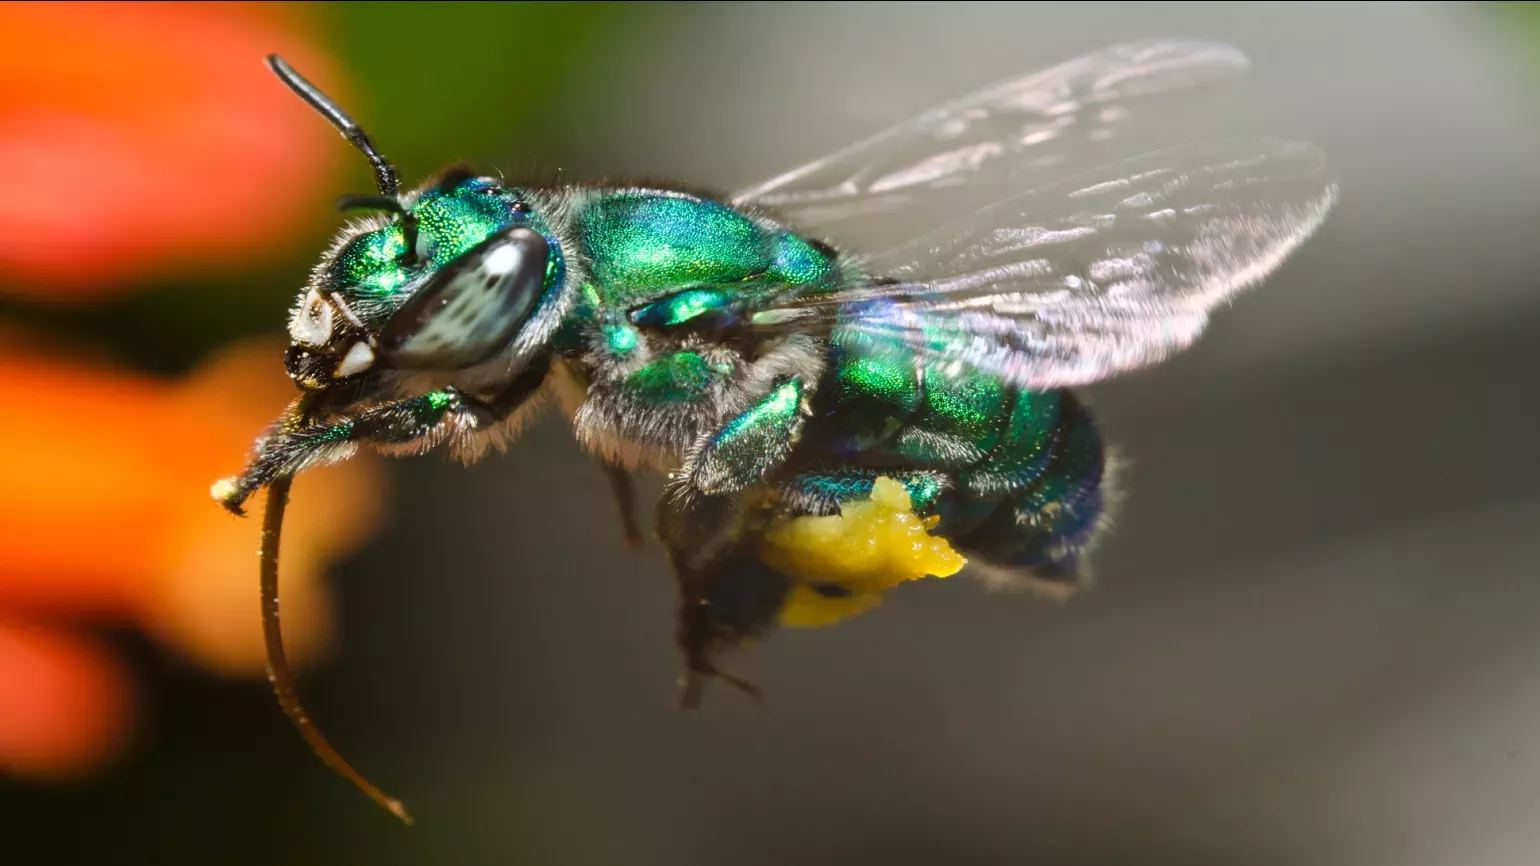 A iridescent green bee in flight